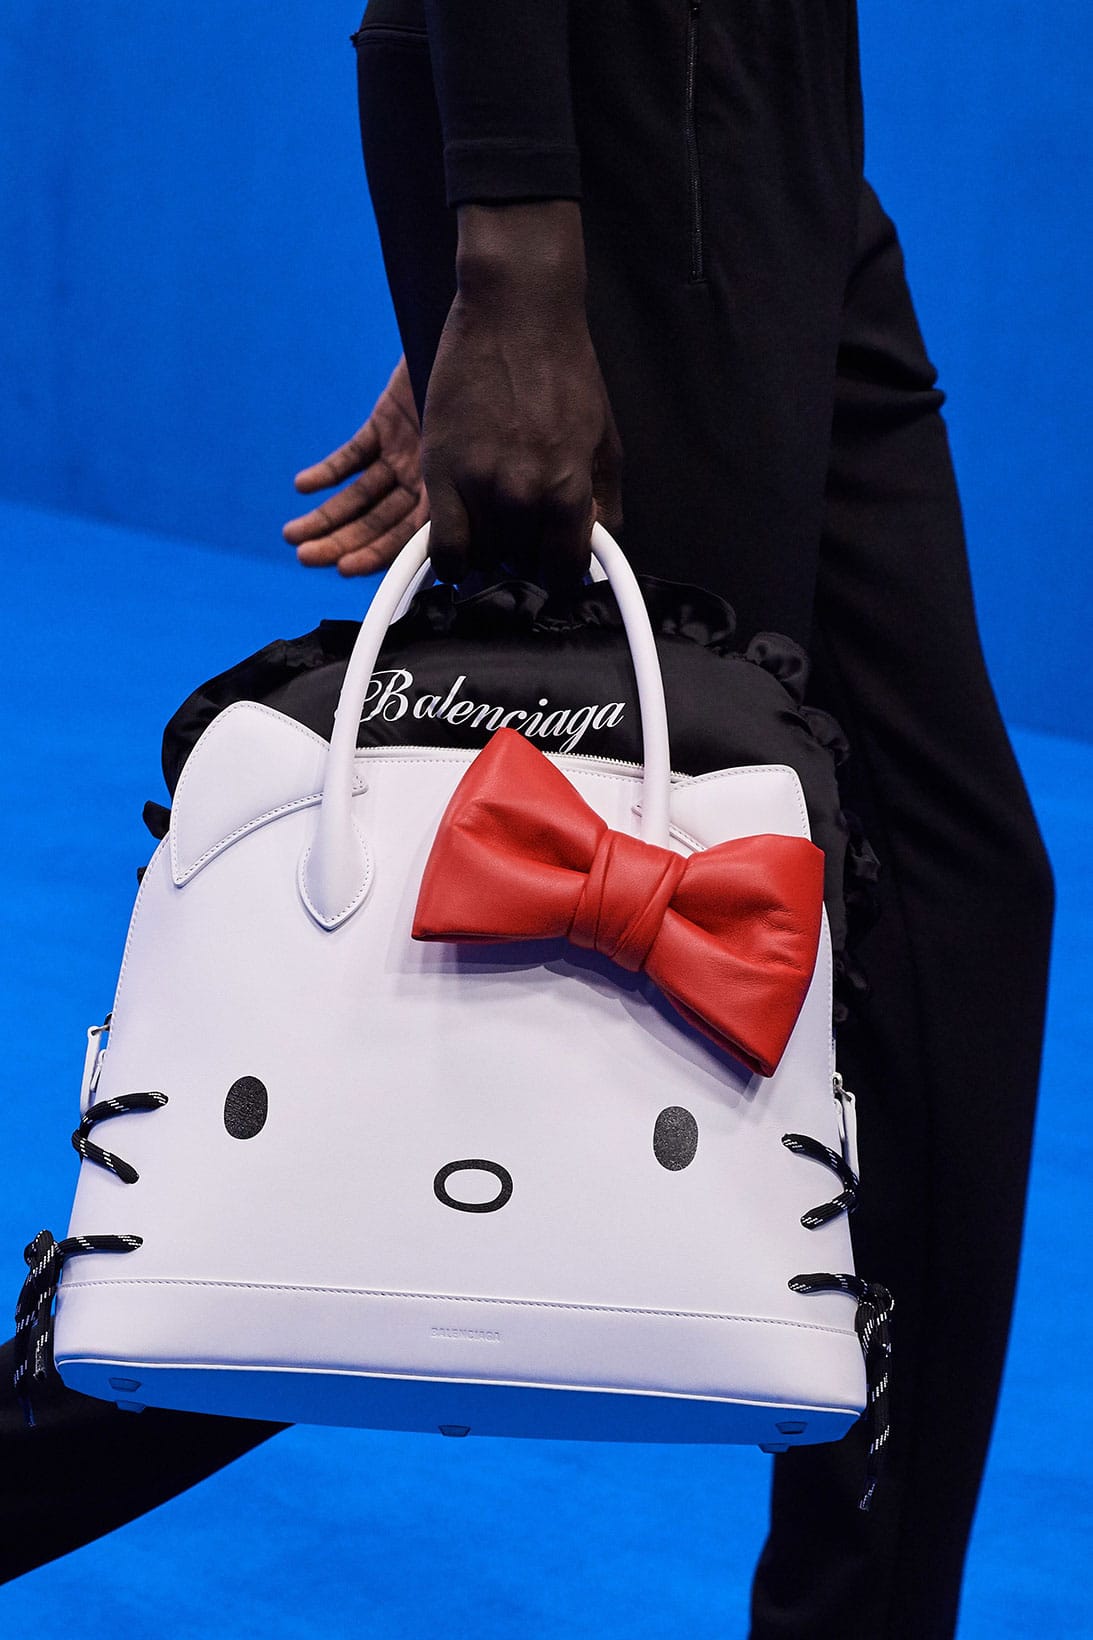 Kerr's Choice Hello Kitty Bag for Girls | Hello Kitty Crossbody Purse |  Girls Cat Bag : Amazon.in: Shoes & Handbags